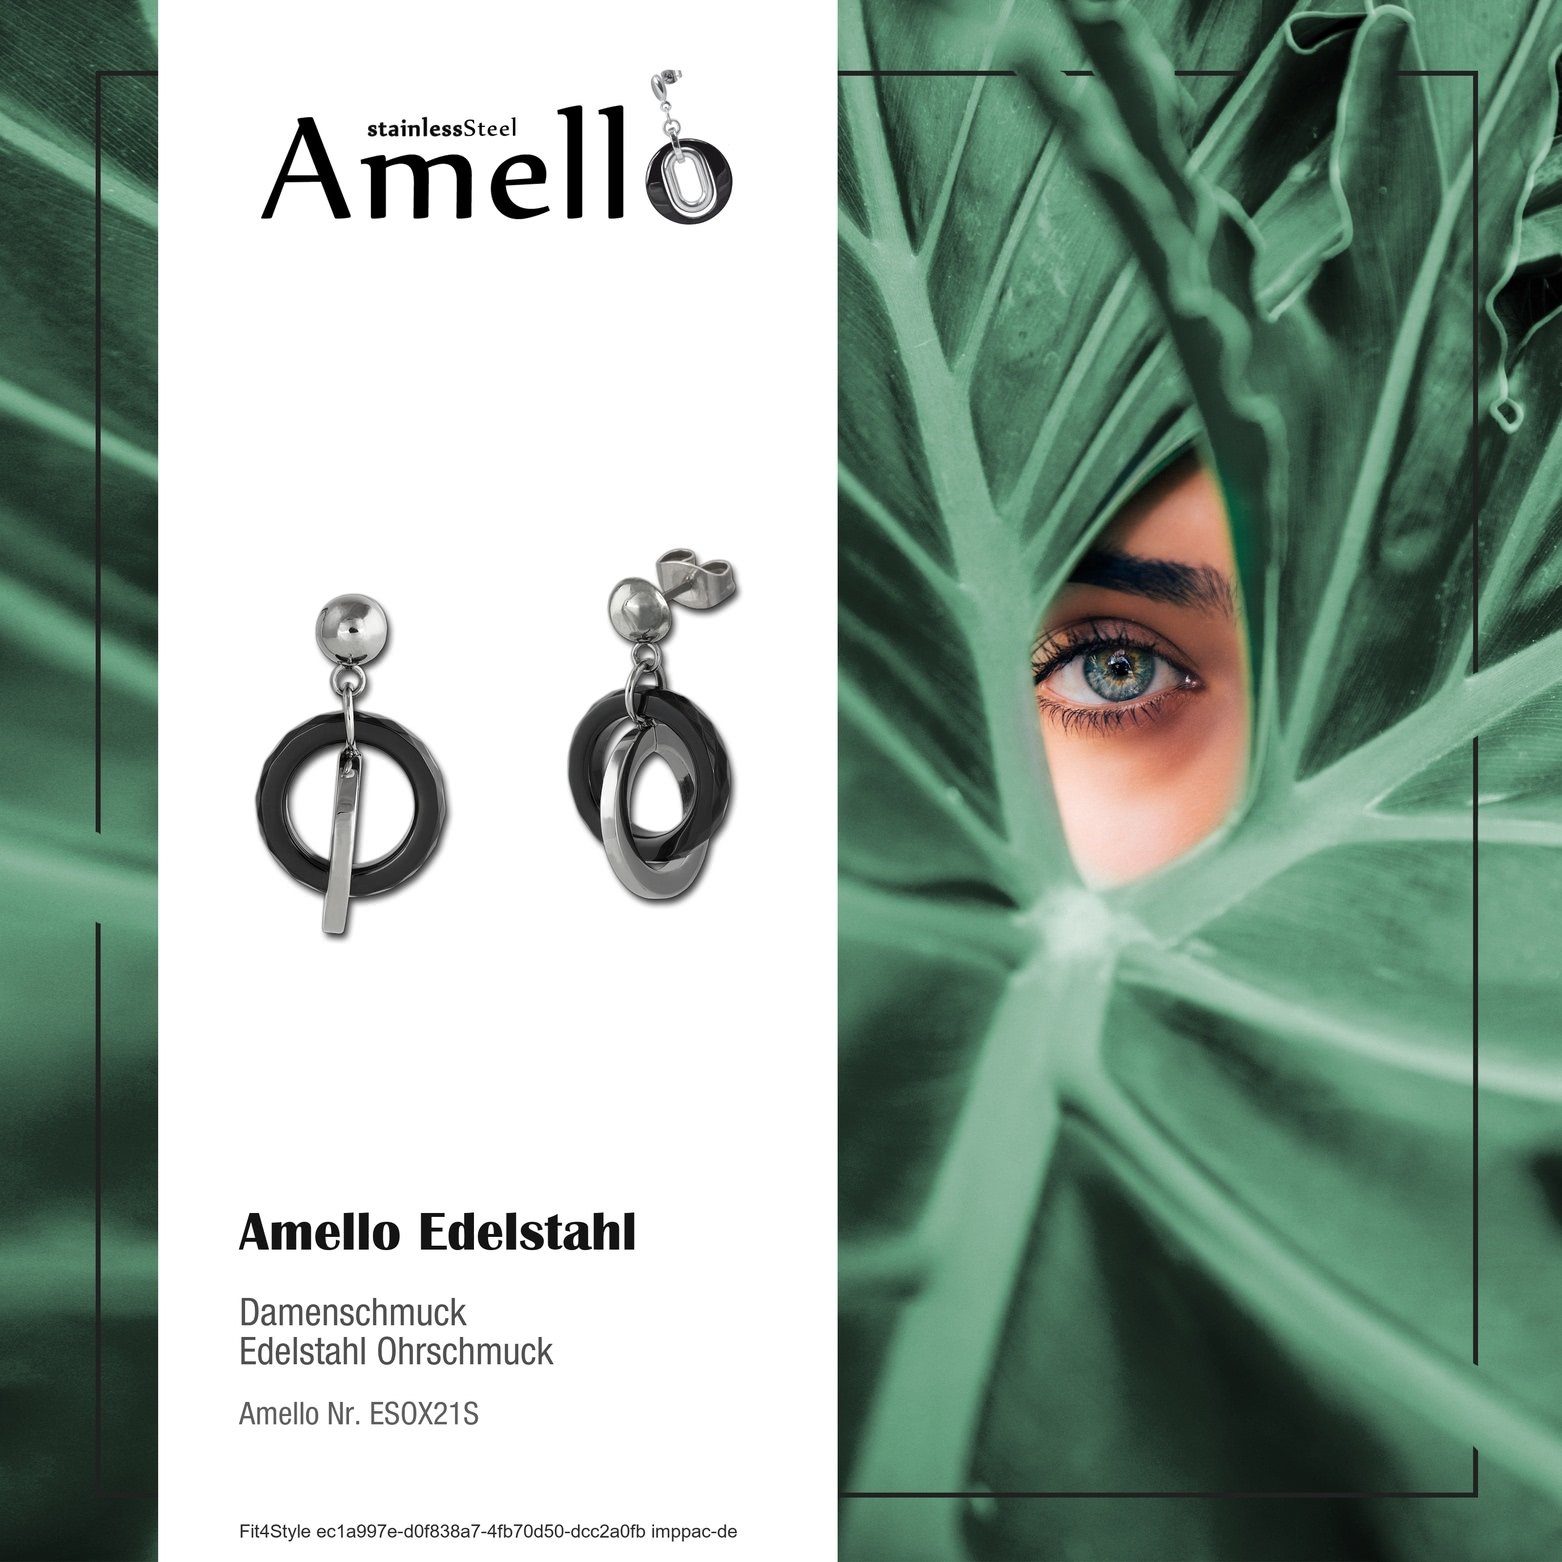 in (Ohrhänger), Amello (Stainless sc Edelstahl Ohrringe Paar Ringe Ohrhänger Damen Edelstahl Ohrhänger Keramik Amello Steel), silberfarben,